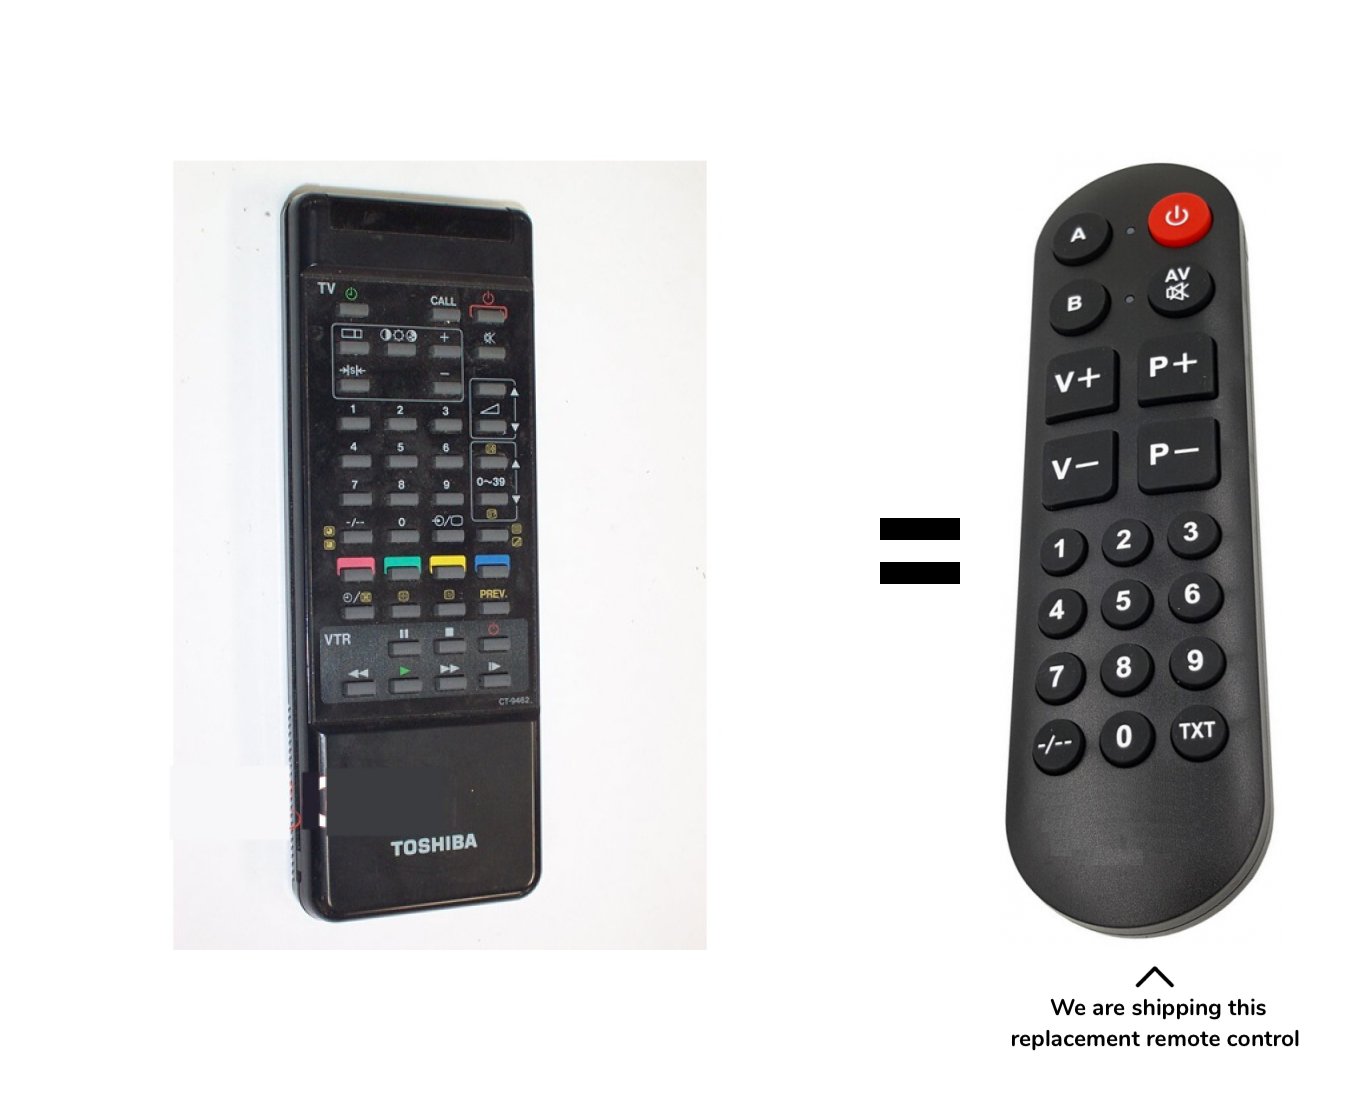 Toshiba CT-9558 remote control for seniors